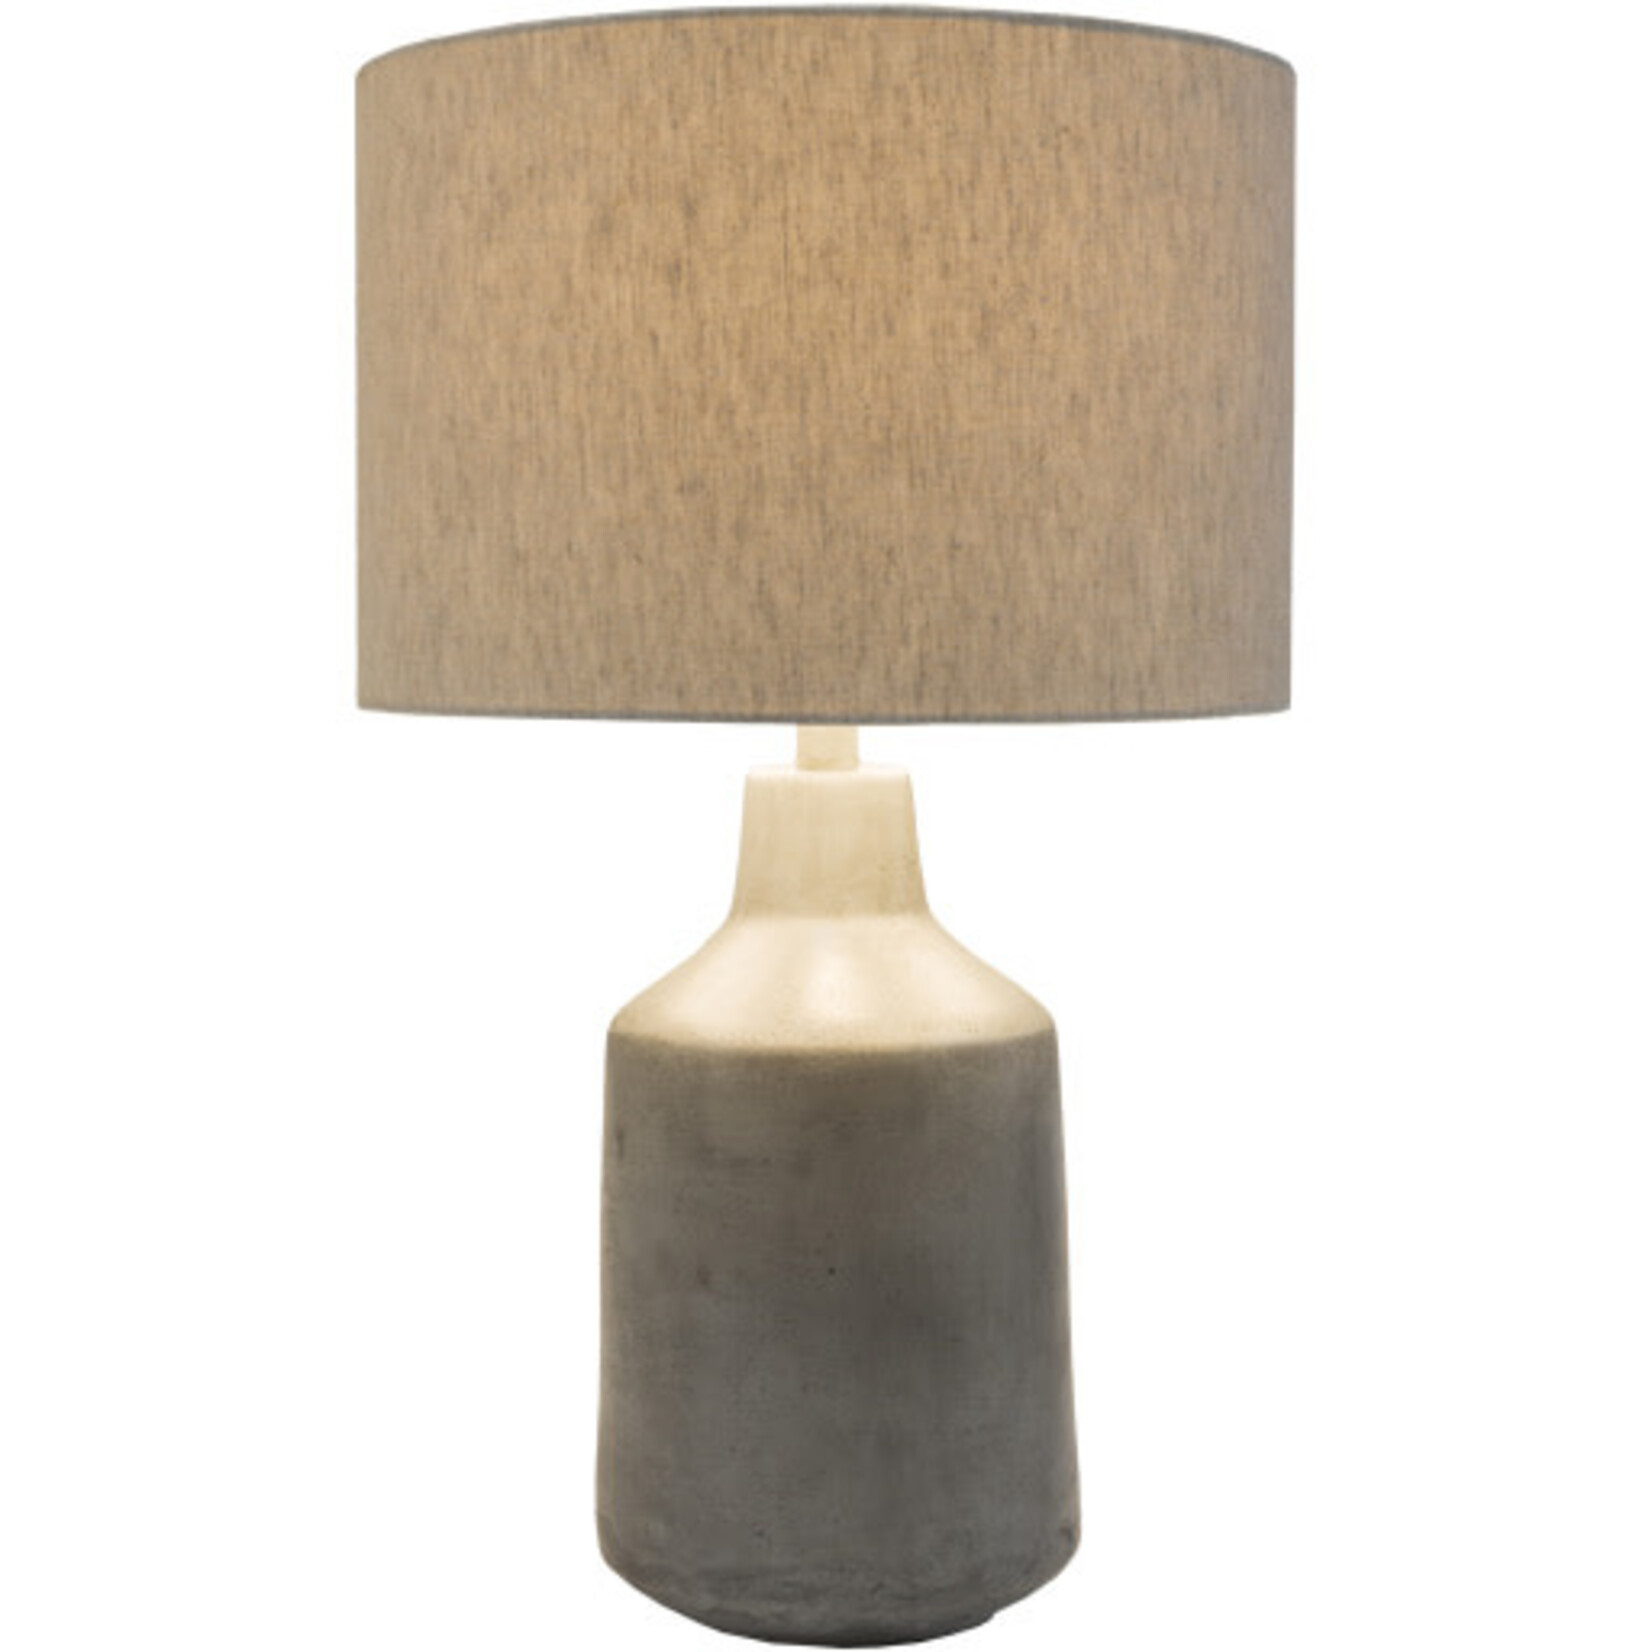 Mickler & Co. Fray Table Lamp